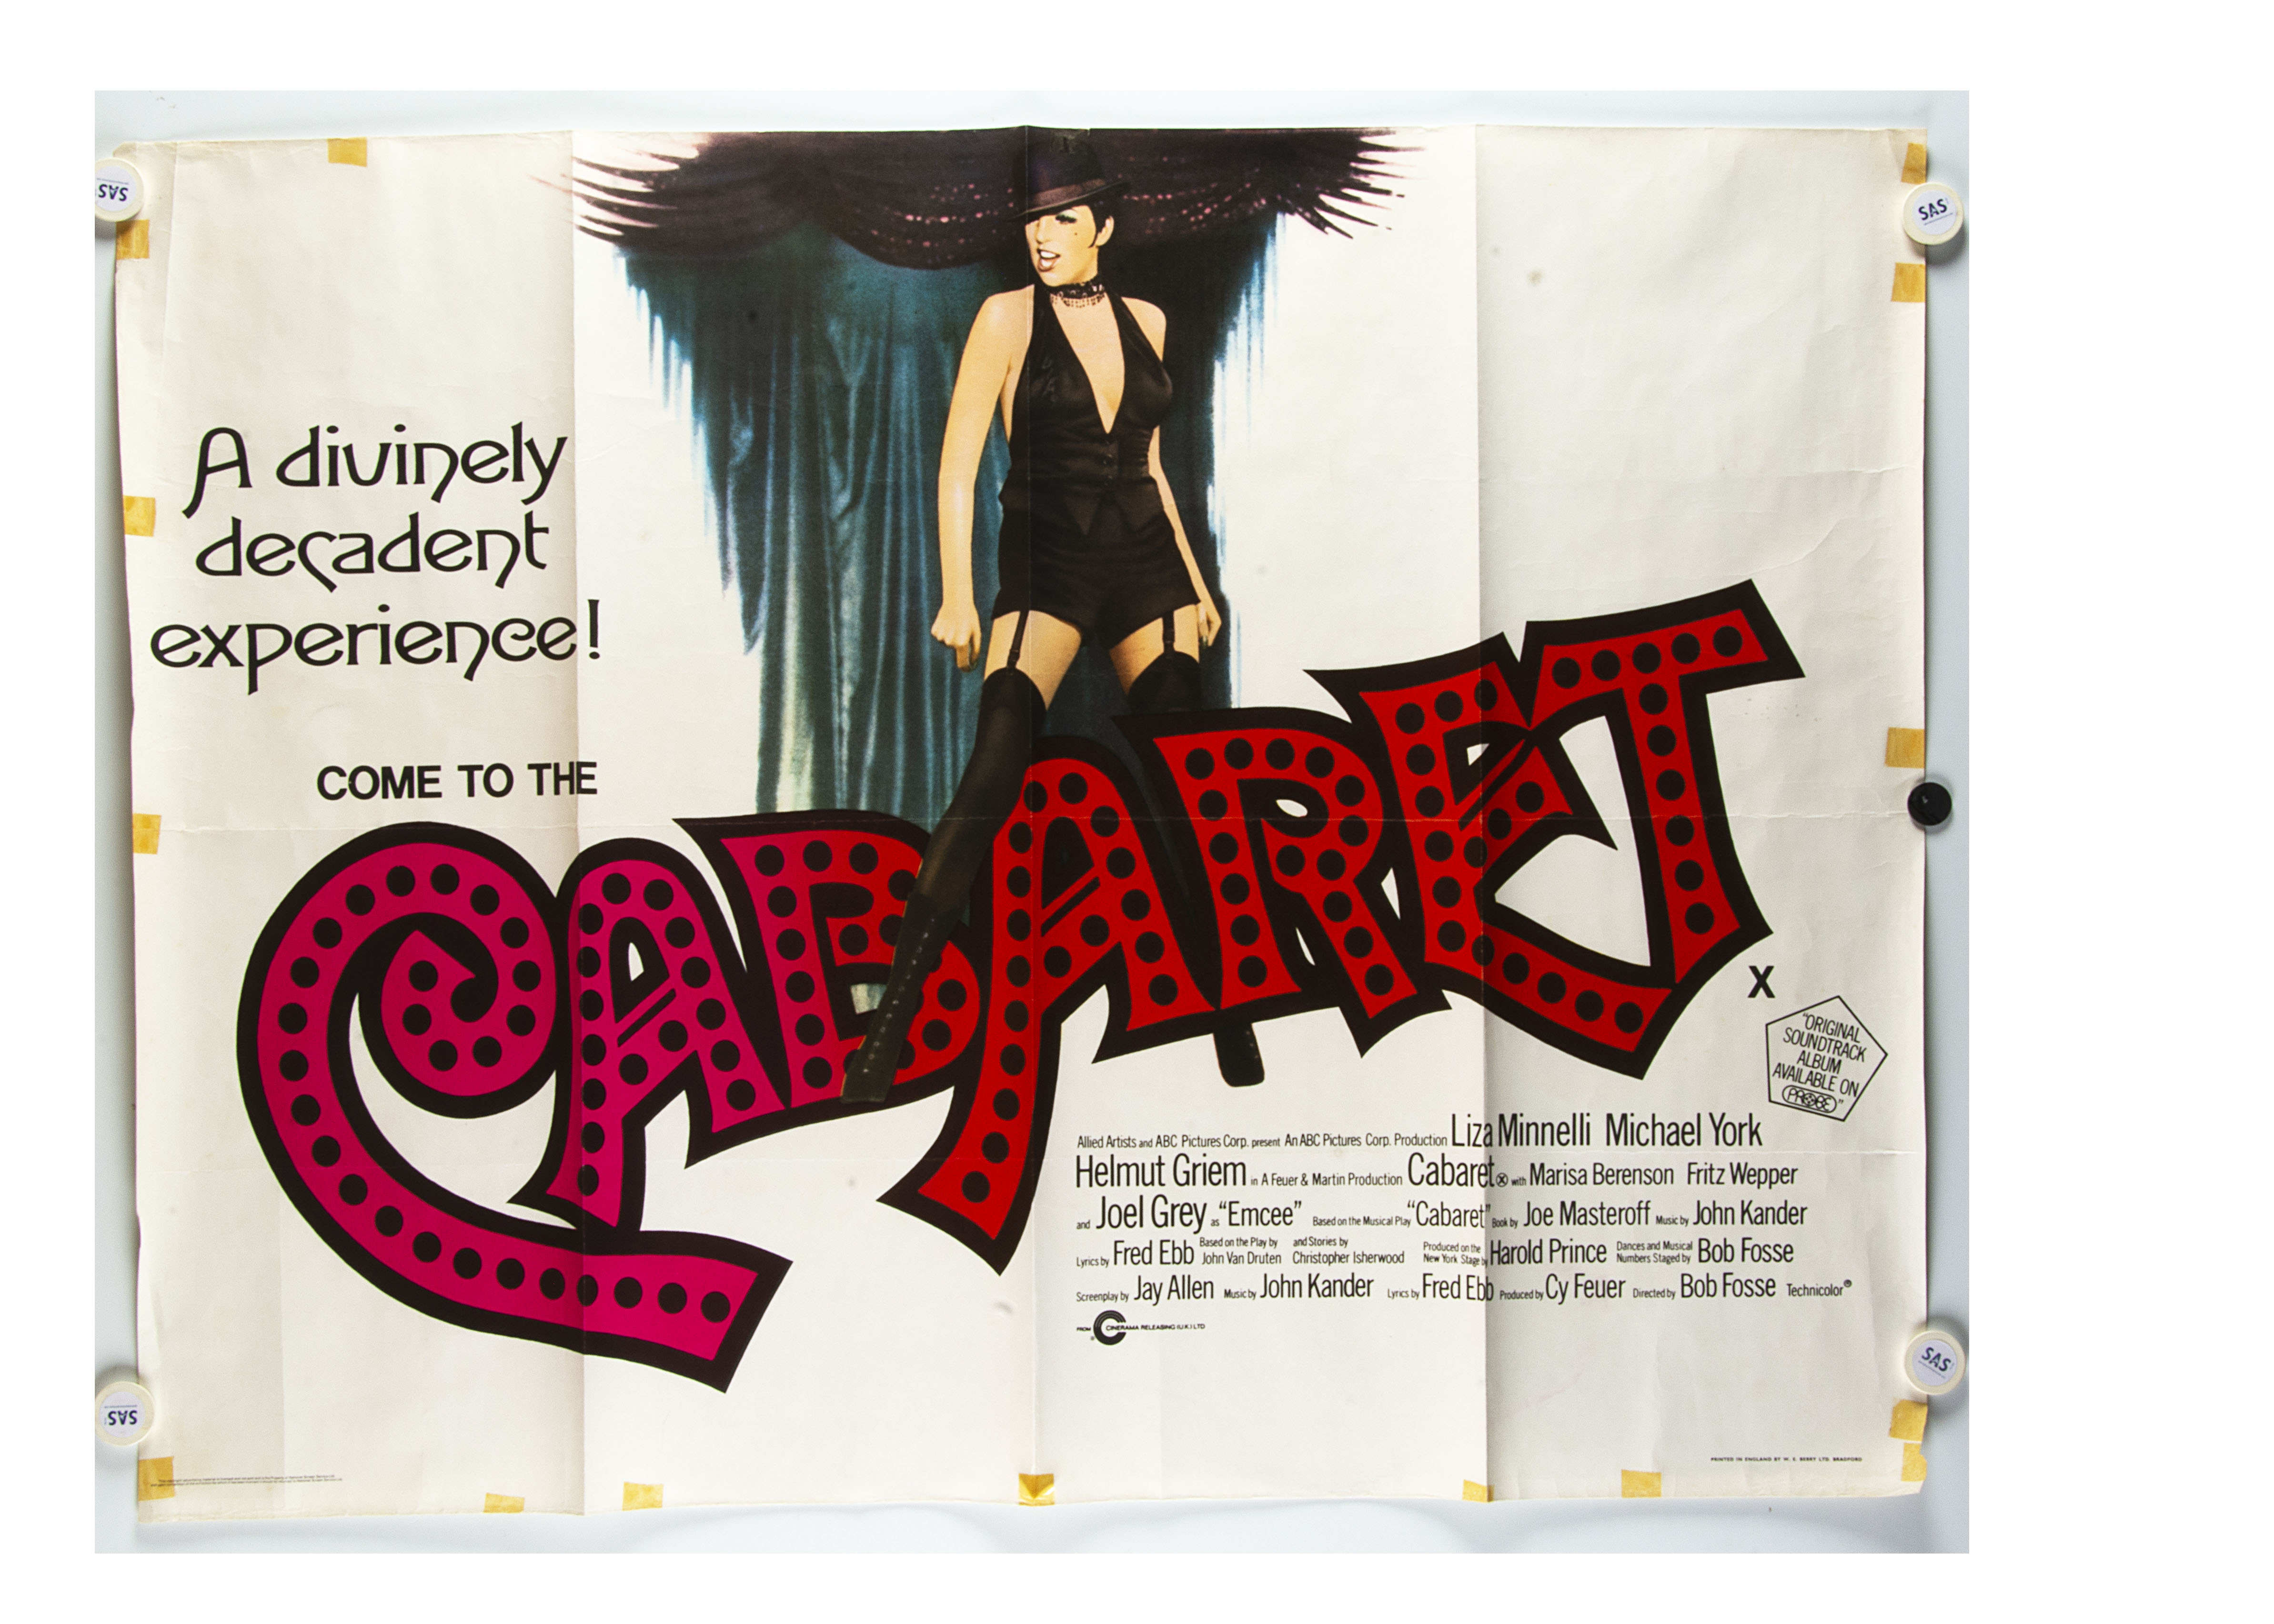 Cabaret UK Quad cinema poster, UK Quad Cinema Poster (1972) starring Liza Minnelli in the pre-War